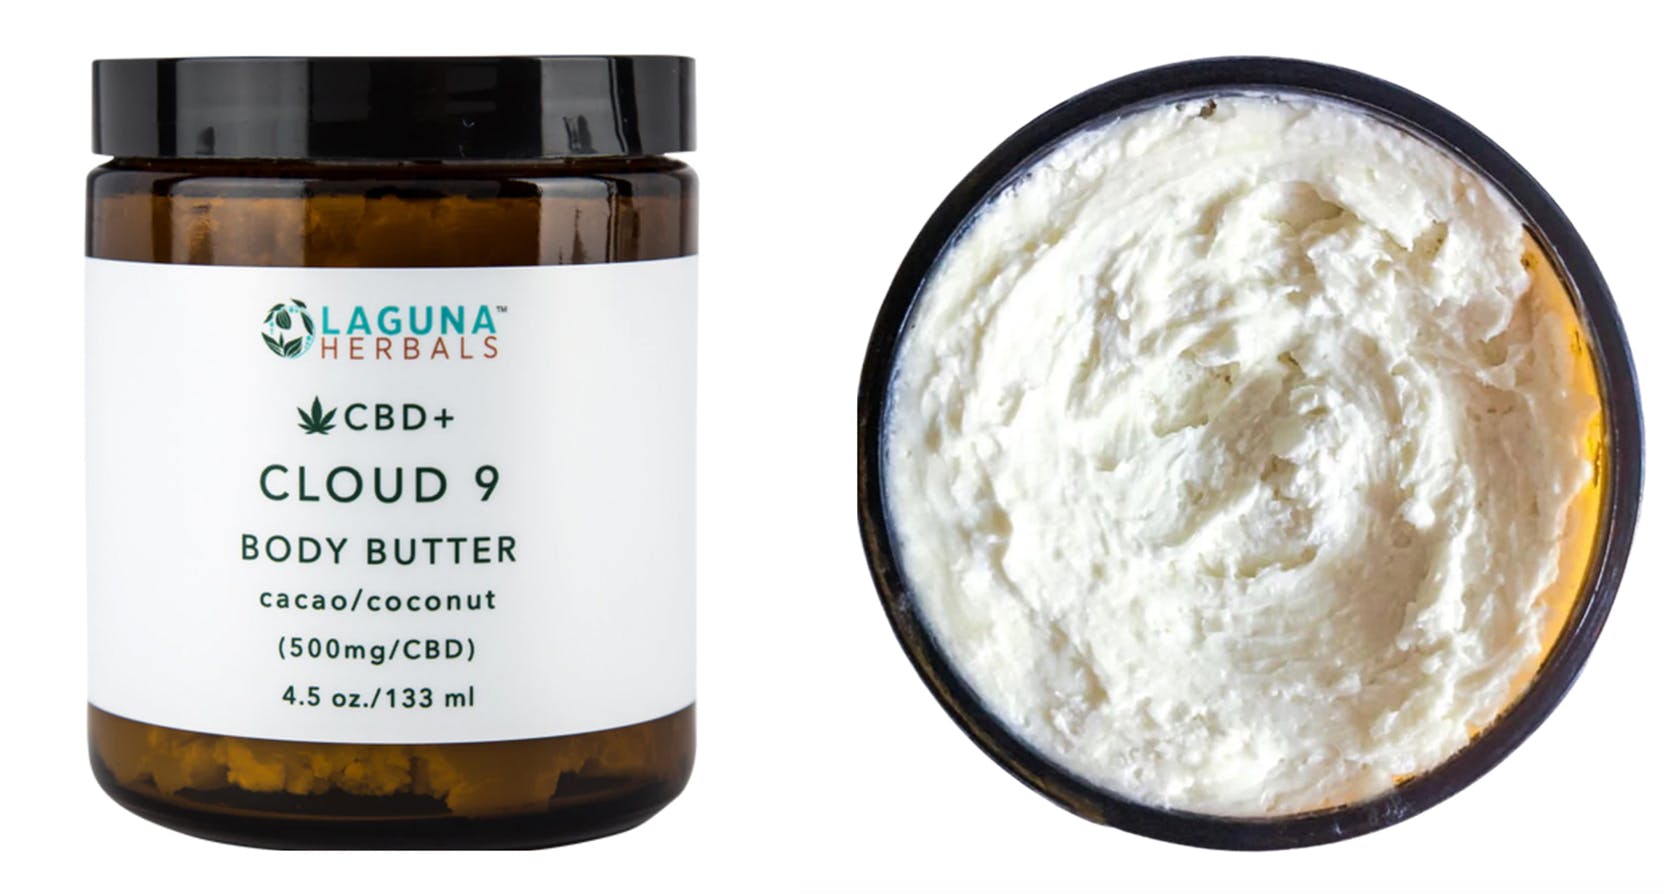 laguna herbals CBD body butter cream